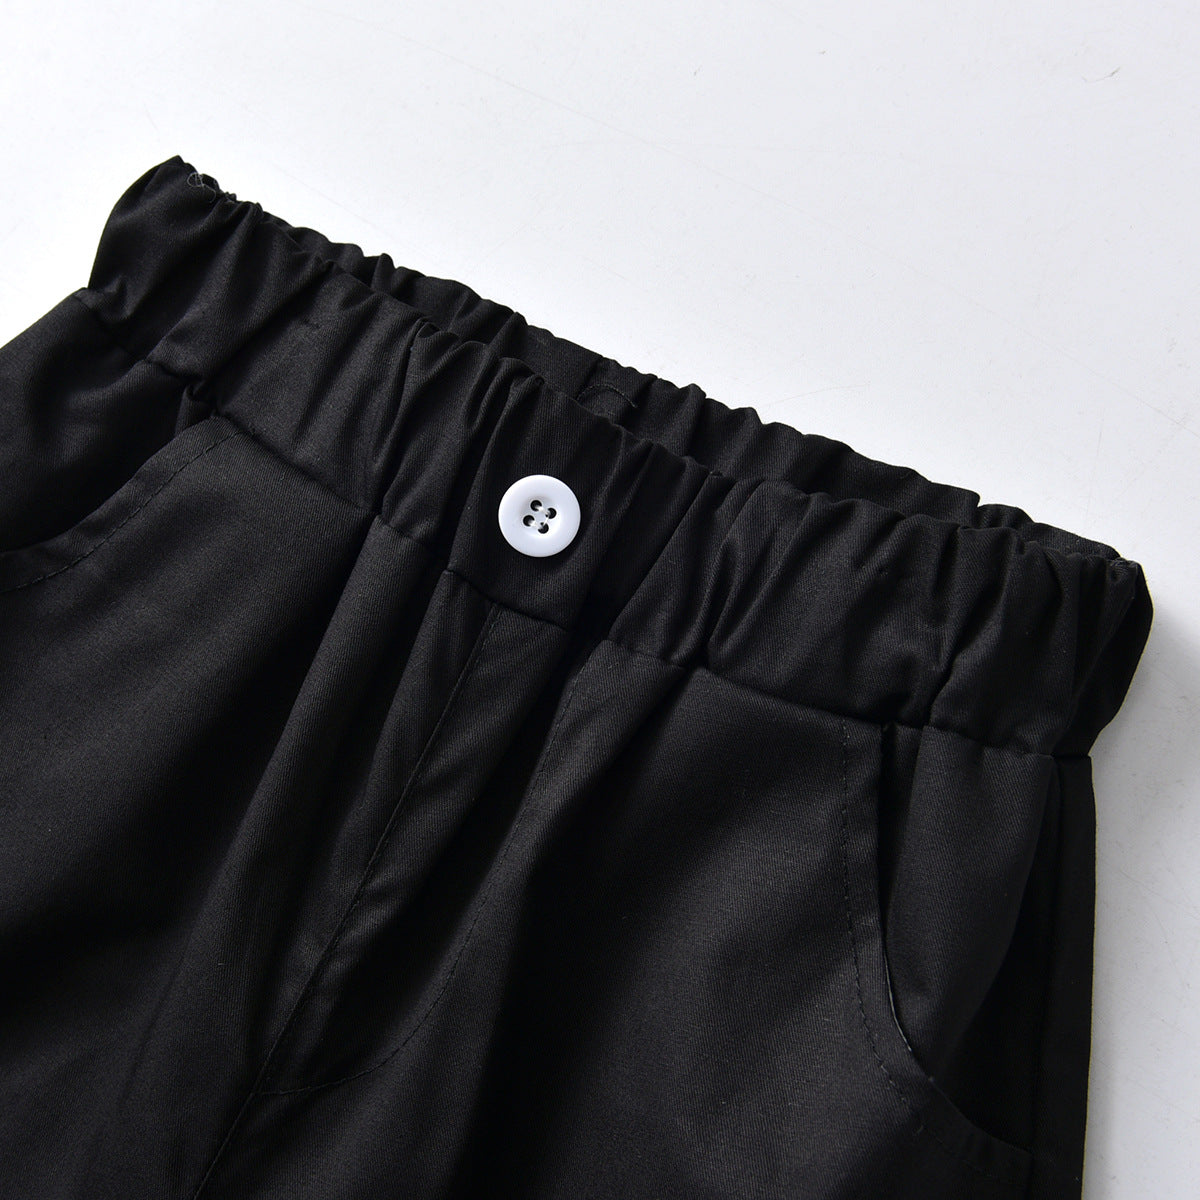 Kid Baby Boy Suit Plaid Short-sleeved Straps Shorts Summer Suits 2 Pcs Sets